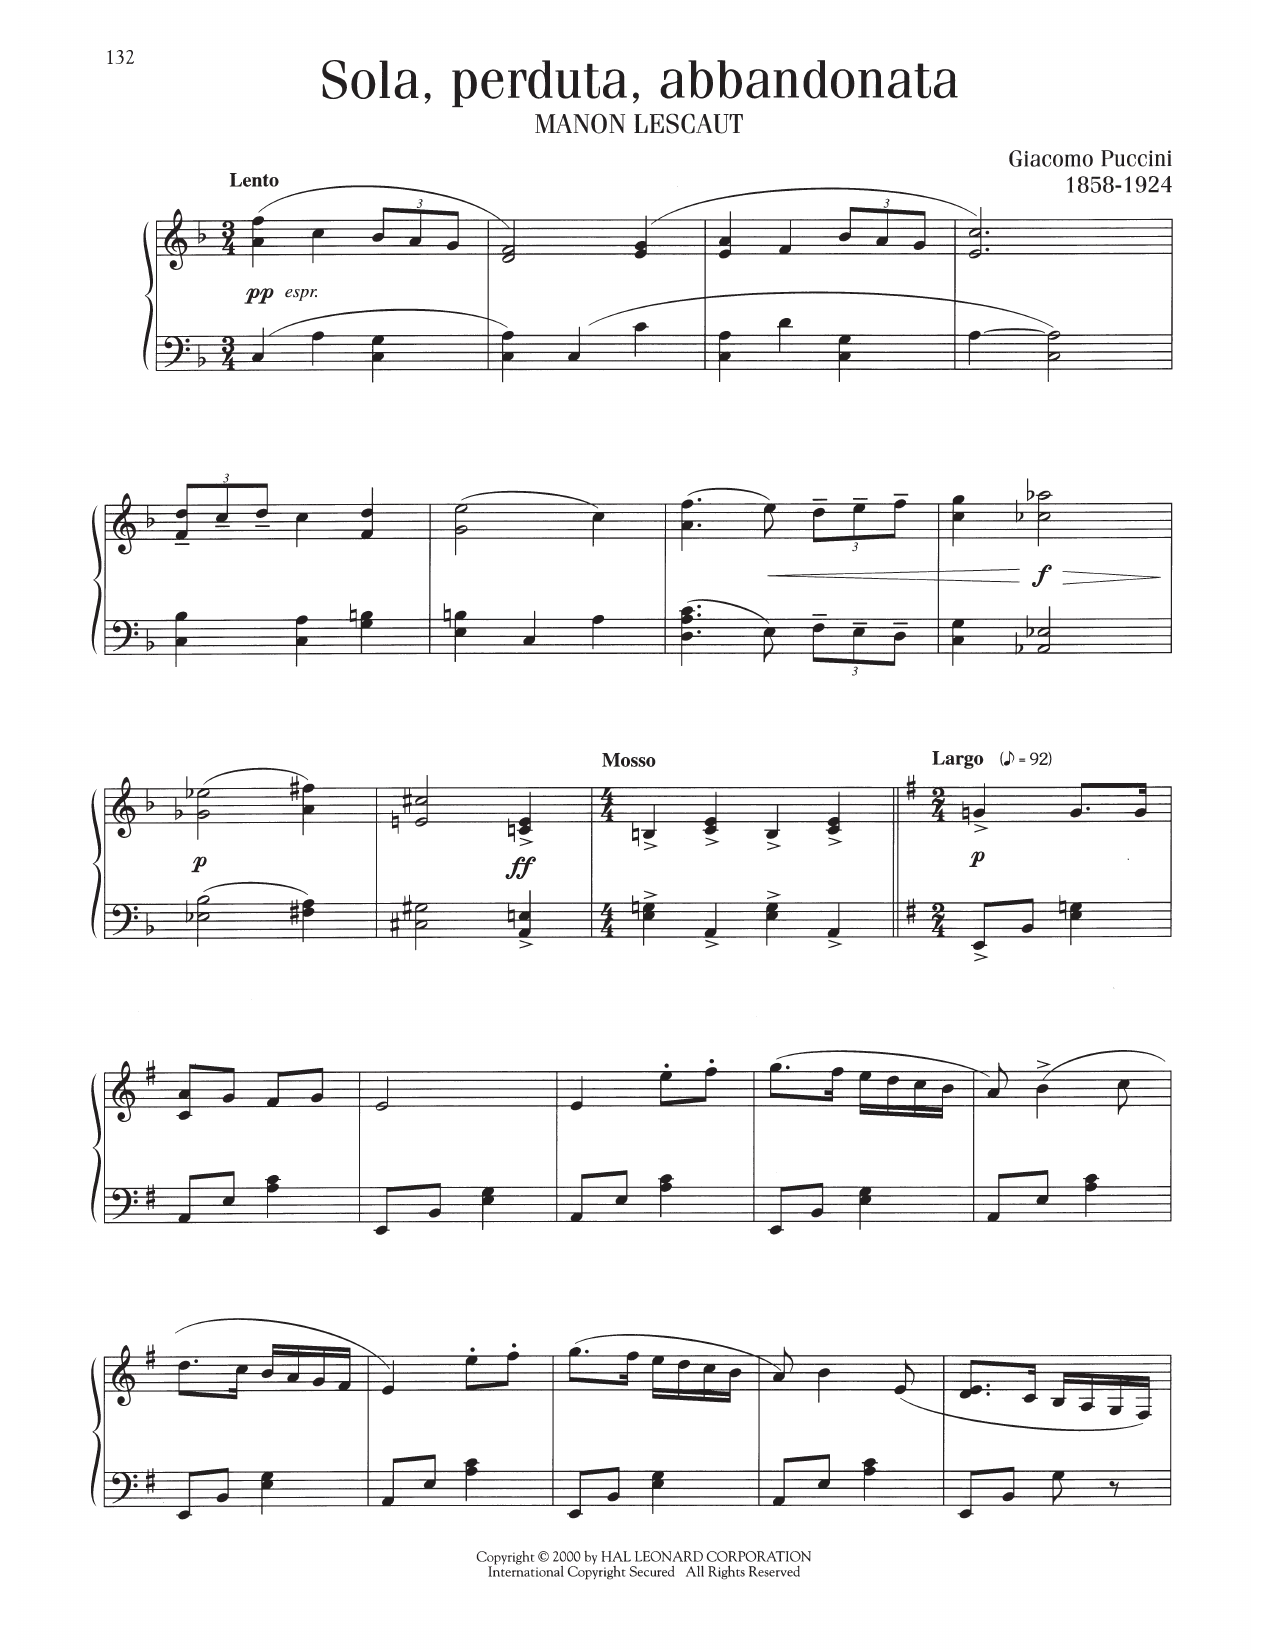 Giacomo Puccini Sola, Perduta, Abbandonata sheet music notes and chords arranged for Piano Solo